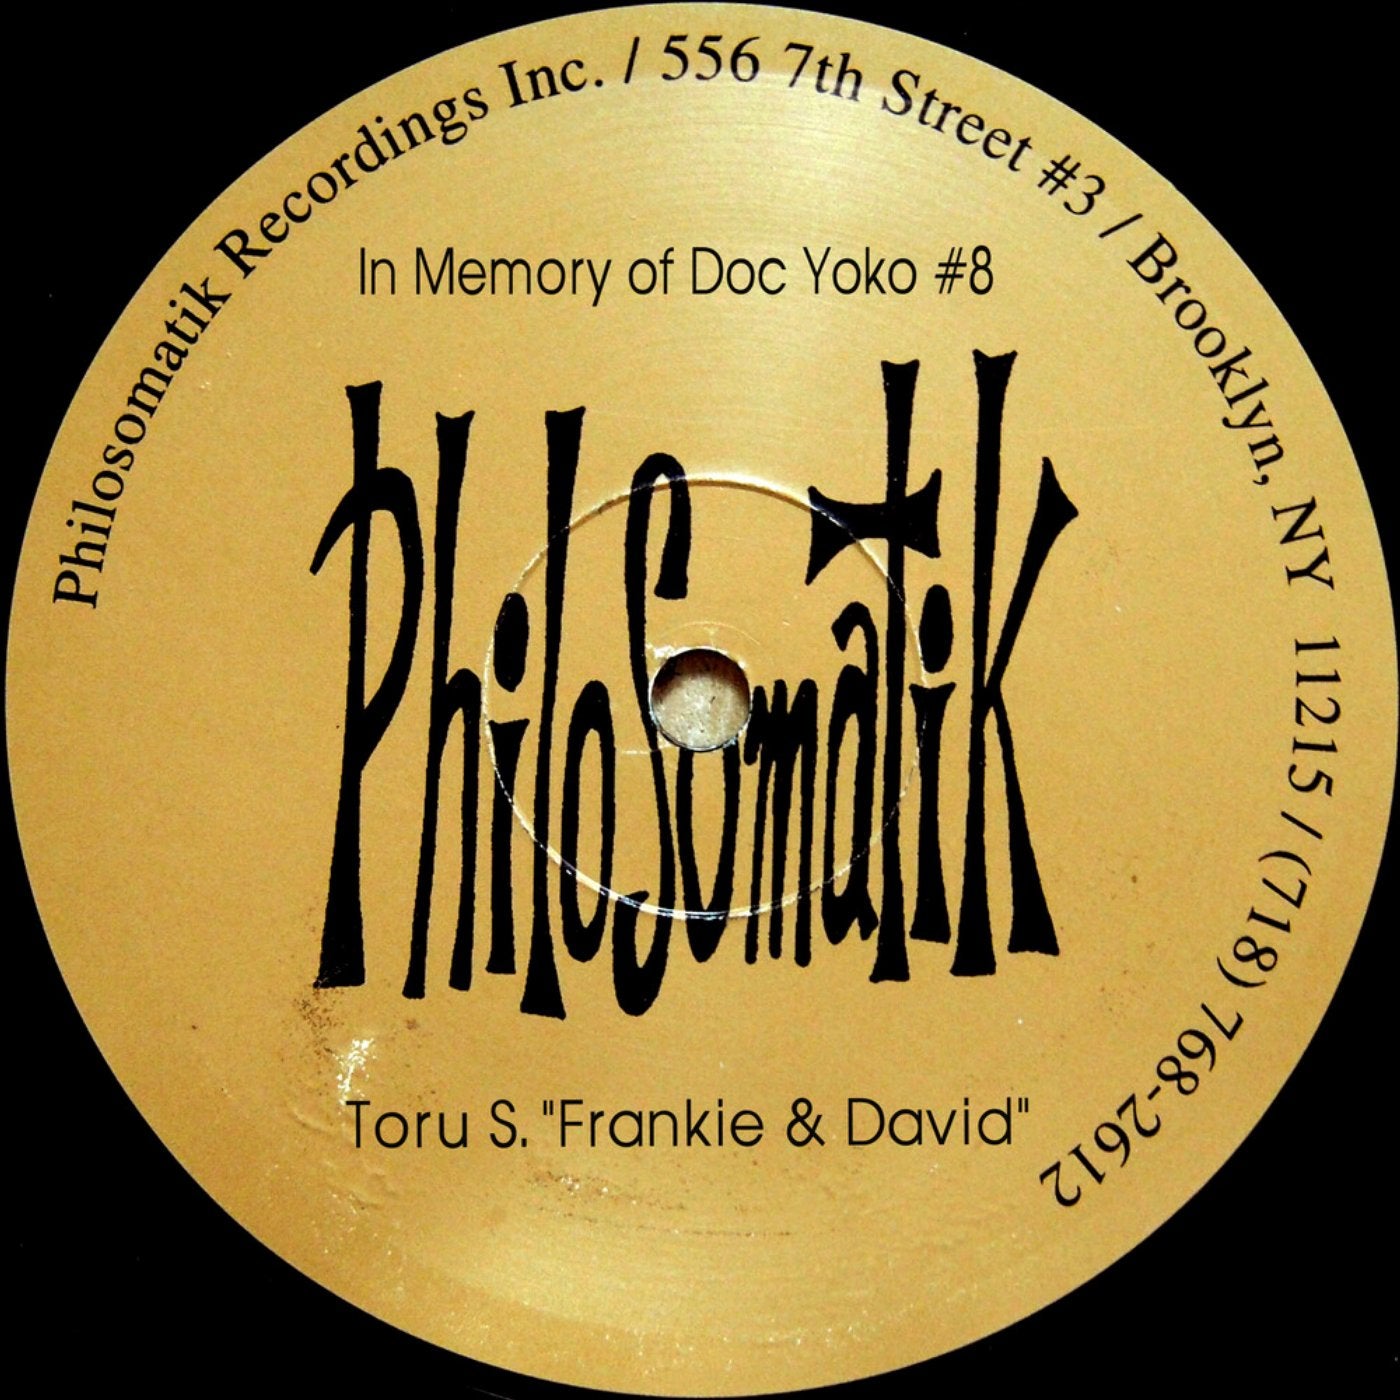 In Memory of Doc Yoko #8: Frankie & David